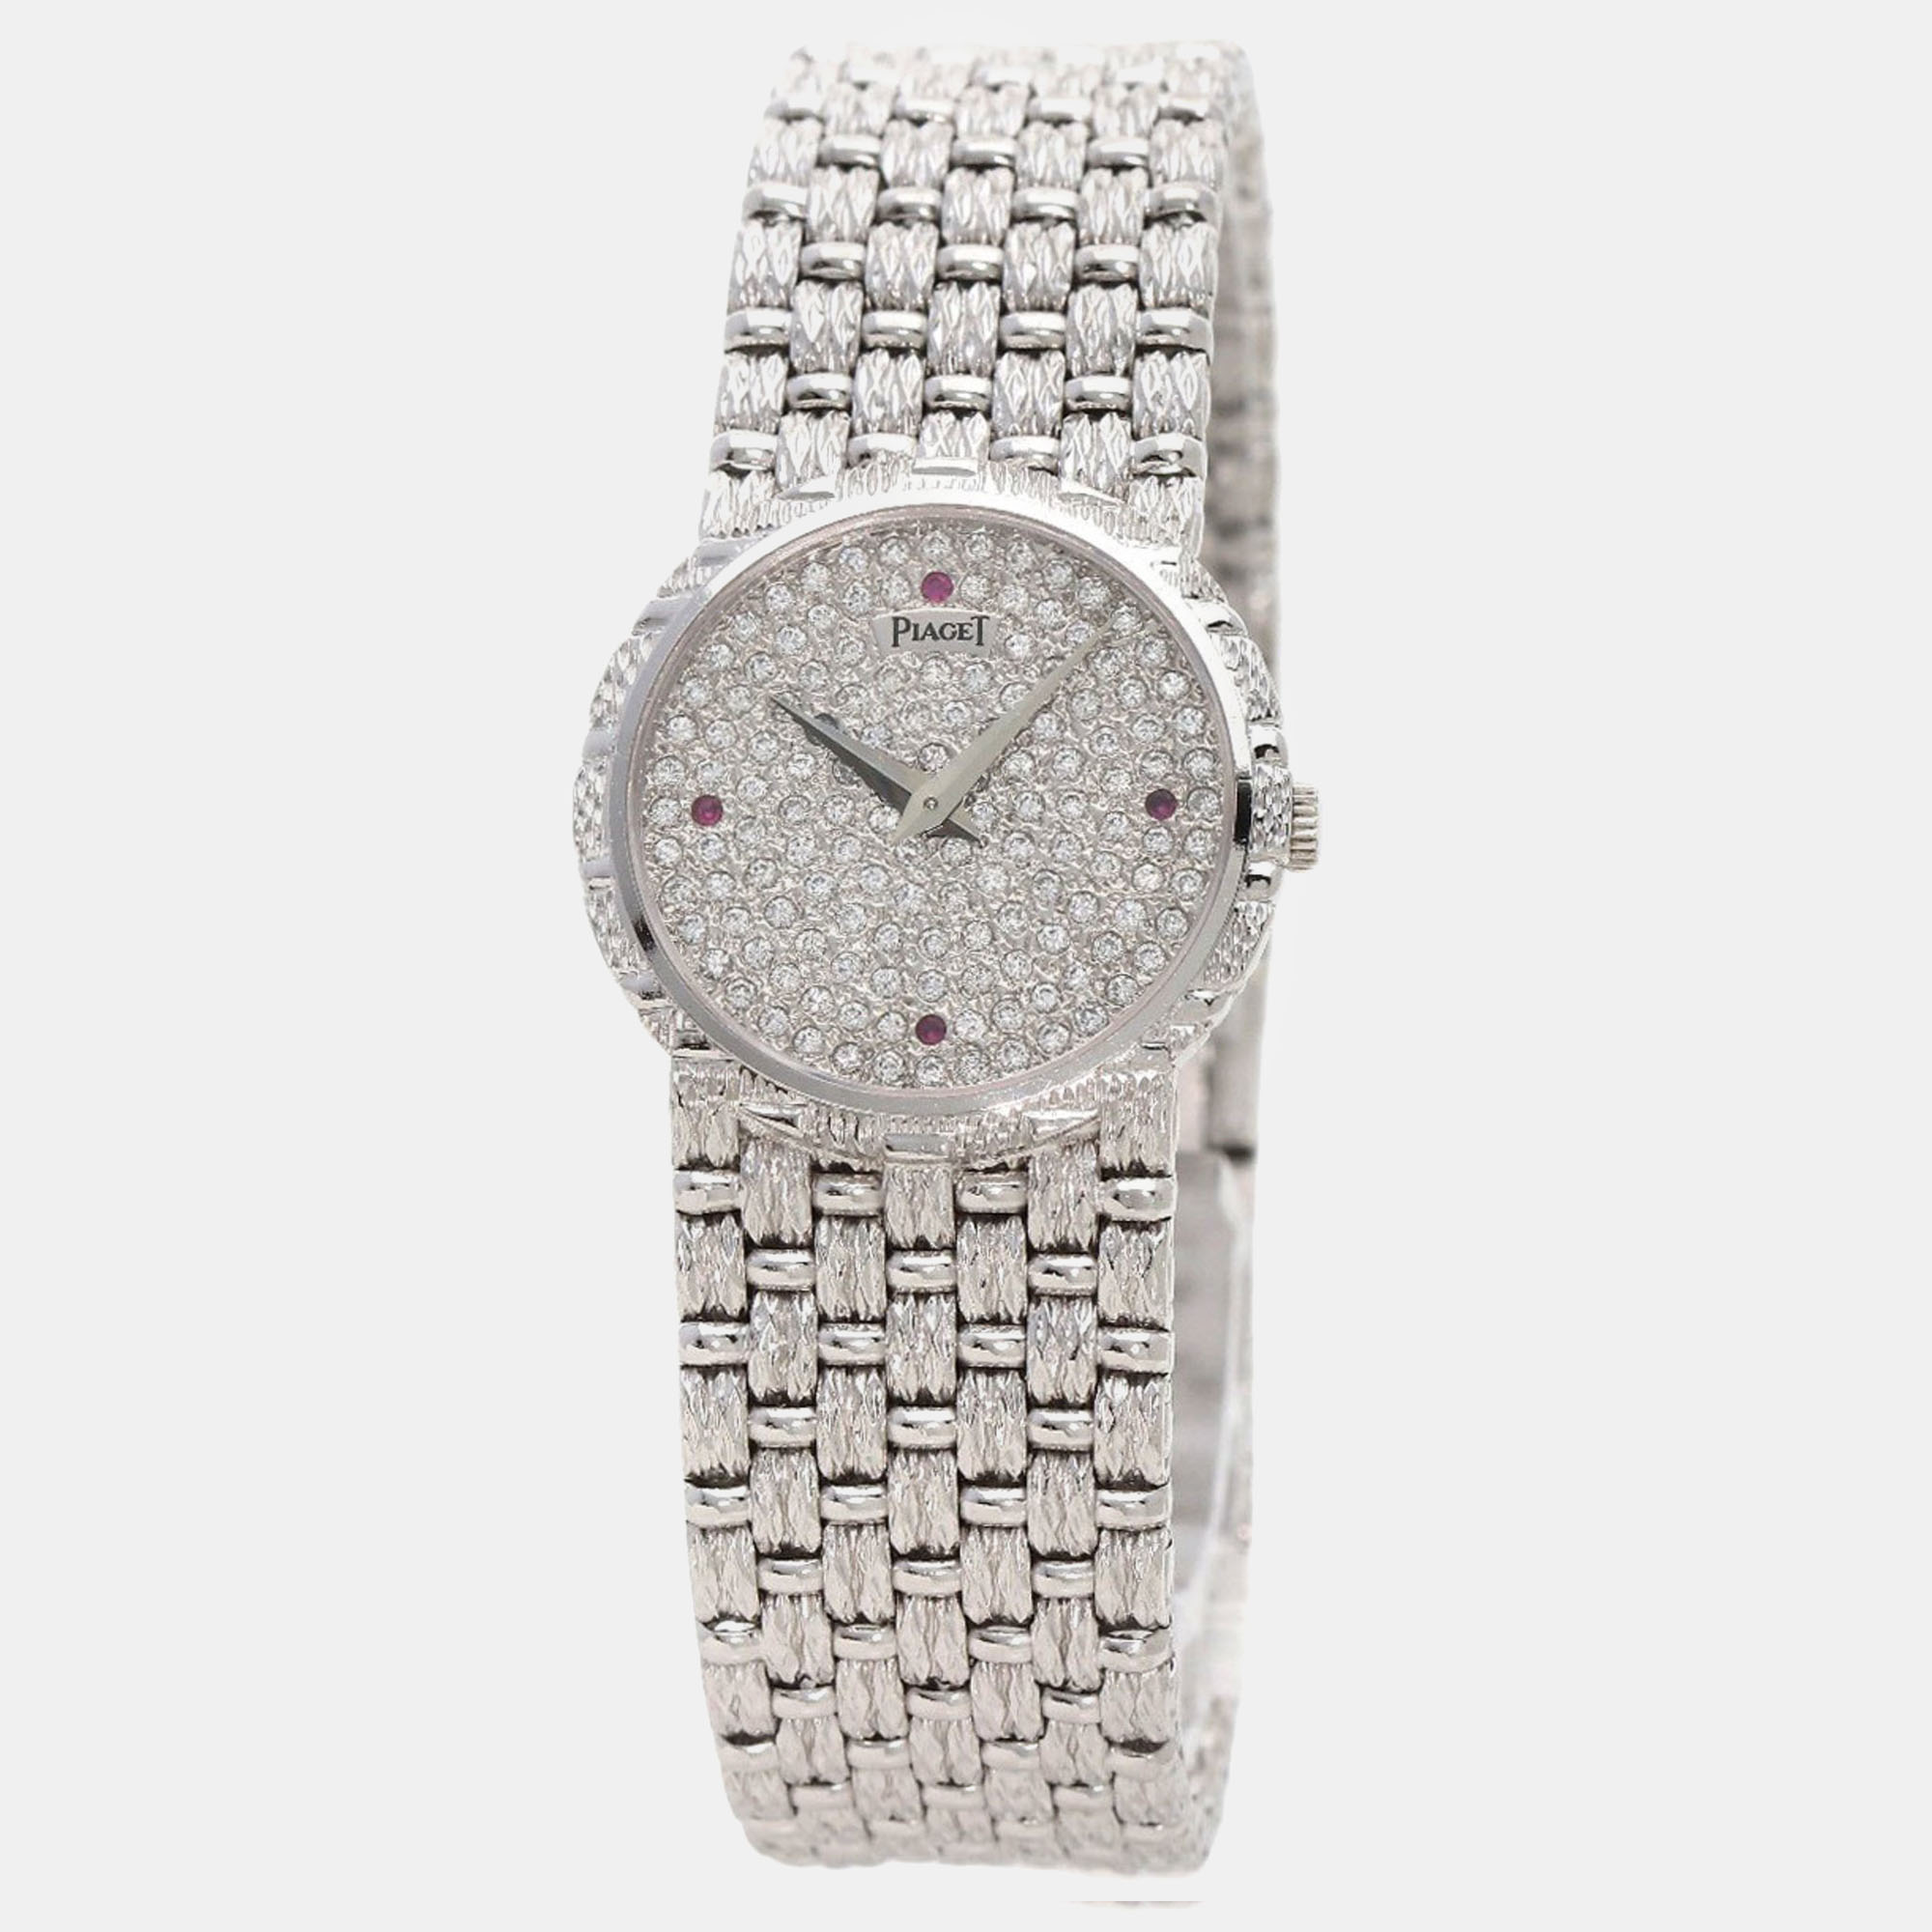 Piaget 18k white gold diamond traditional 924d23 quartz women's wristwatch 24 mm